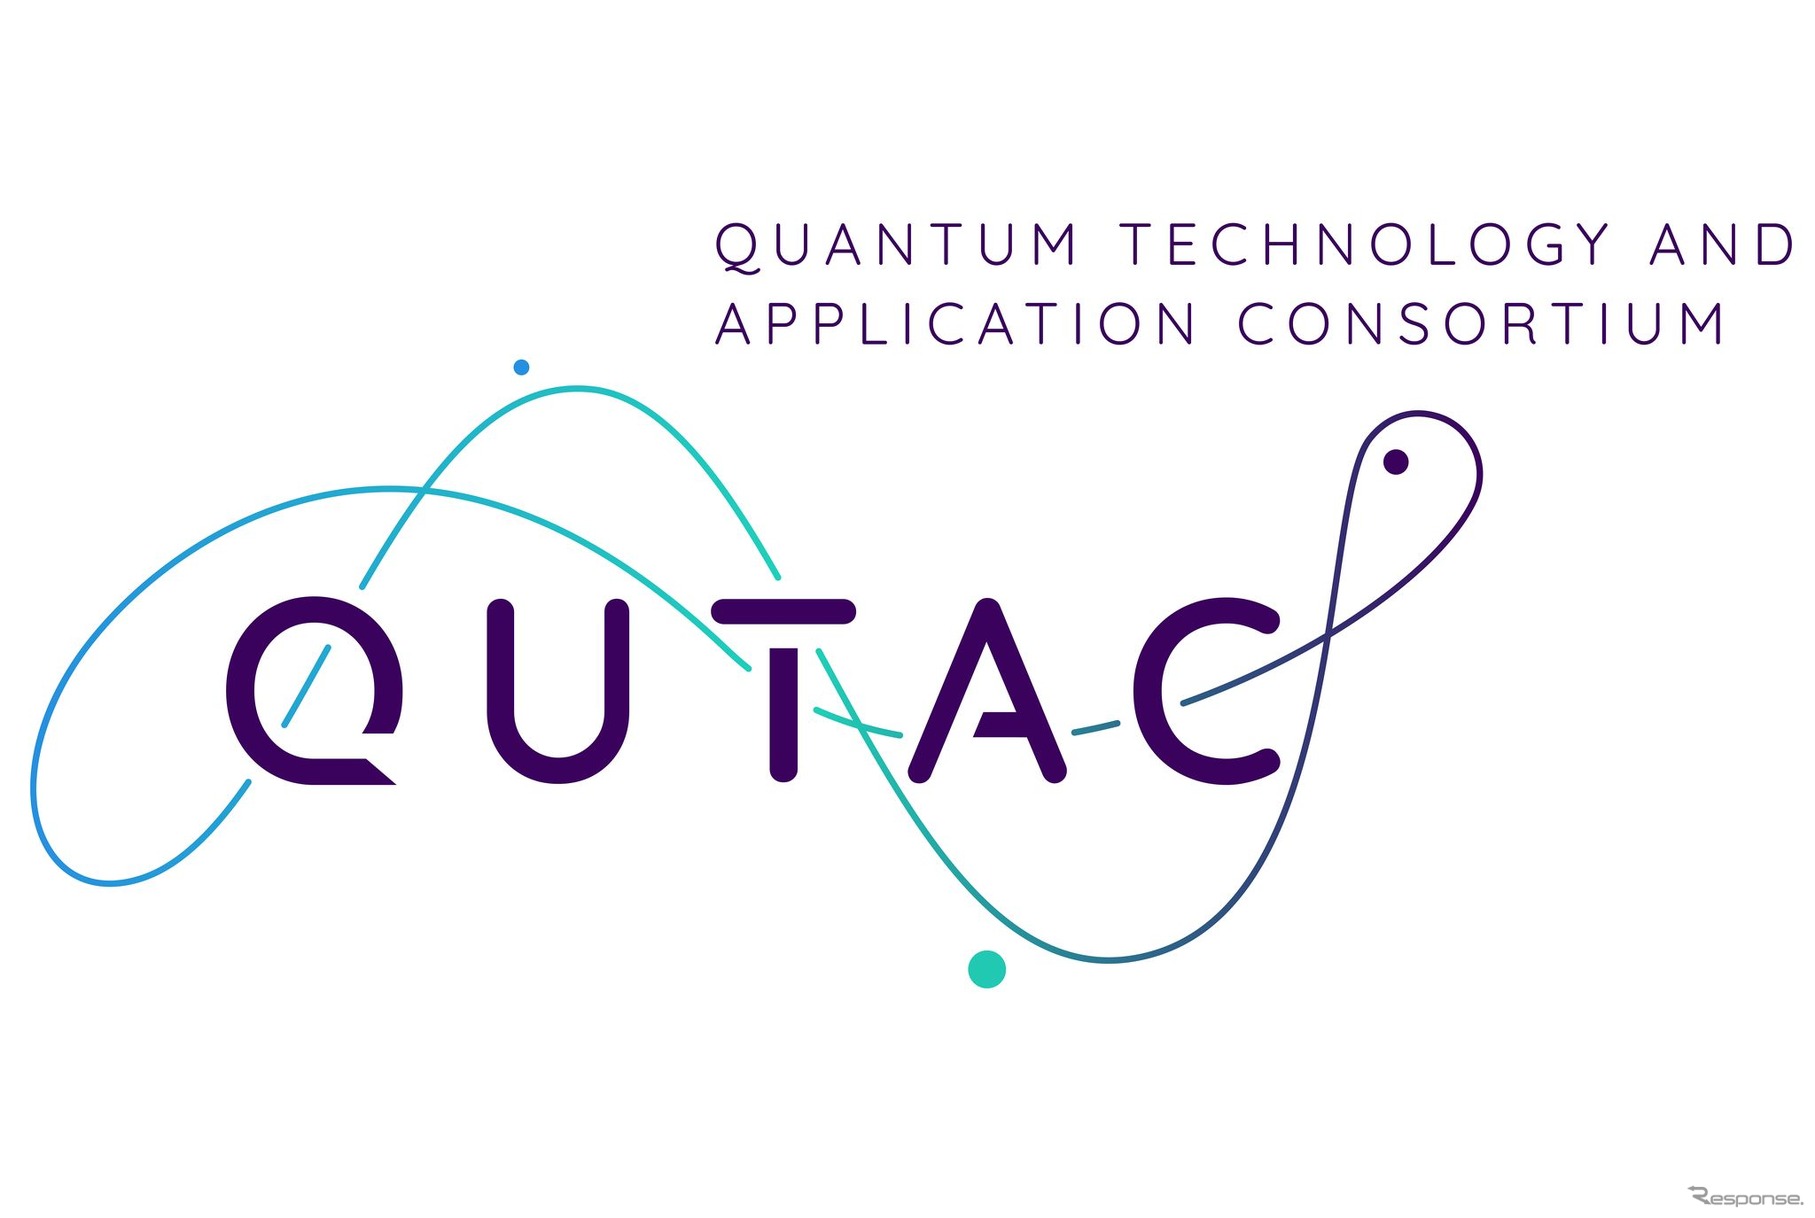 BMWグループやVWグループなどドイツ10社が量子コンピューターの産業利用を目的として設立したコンソーシアム「QUTAC」のロゴ